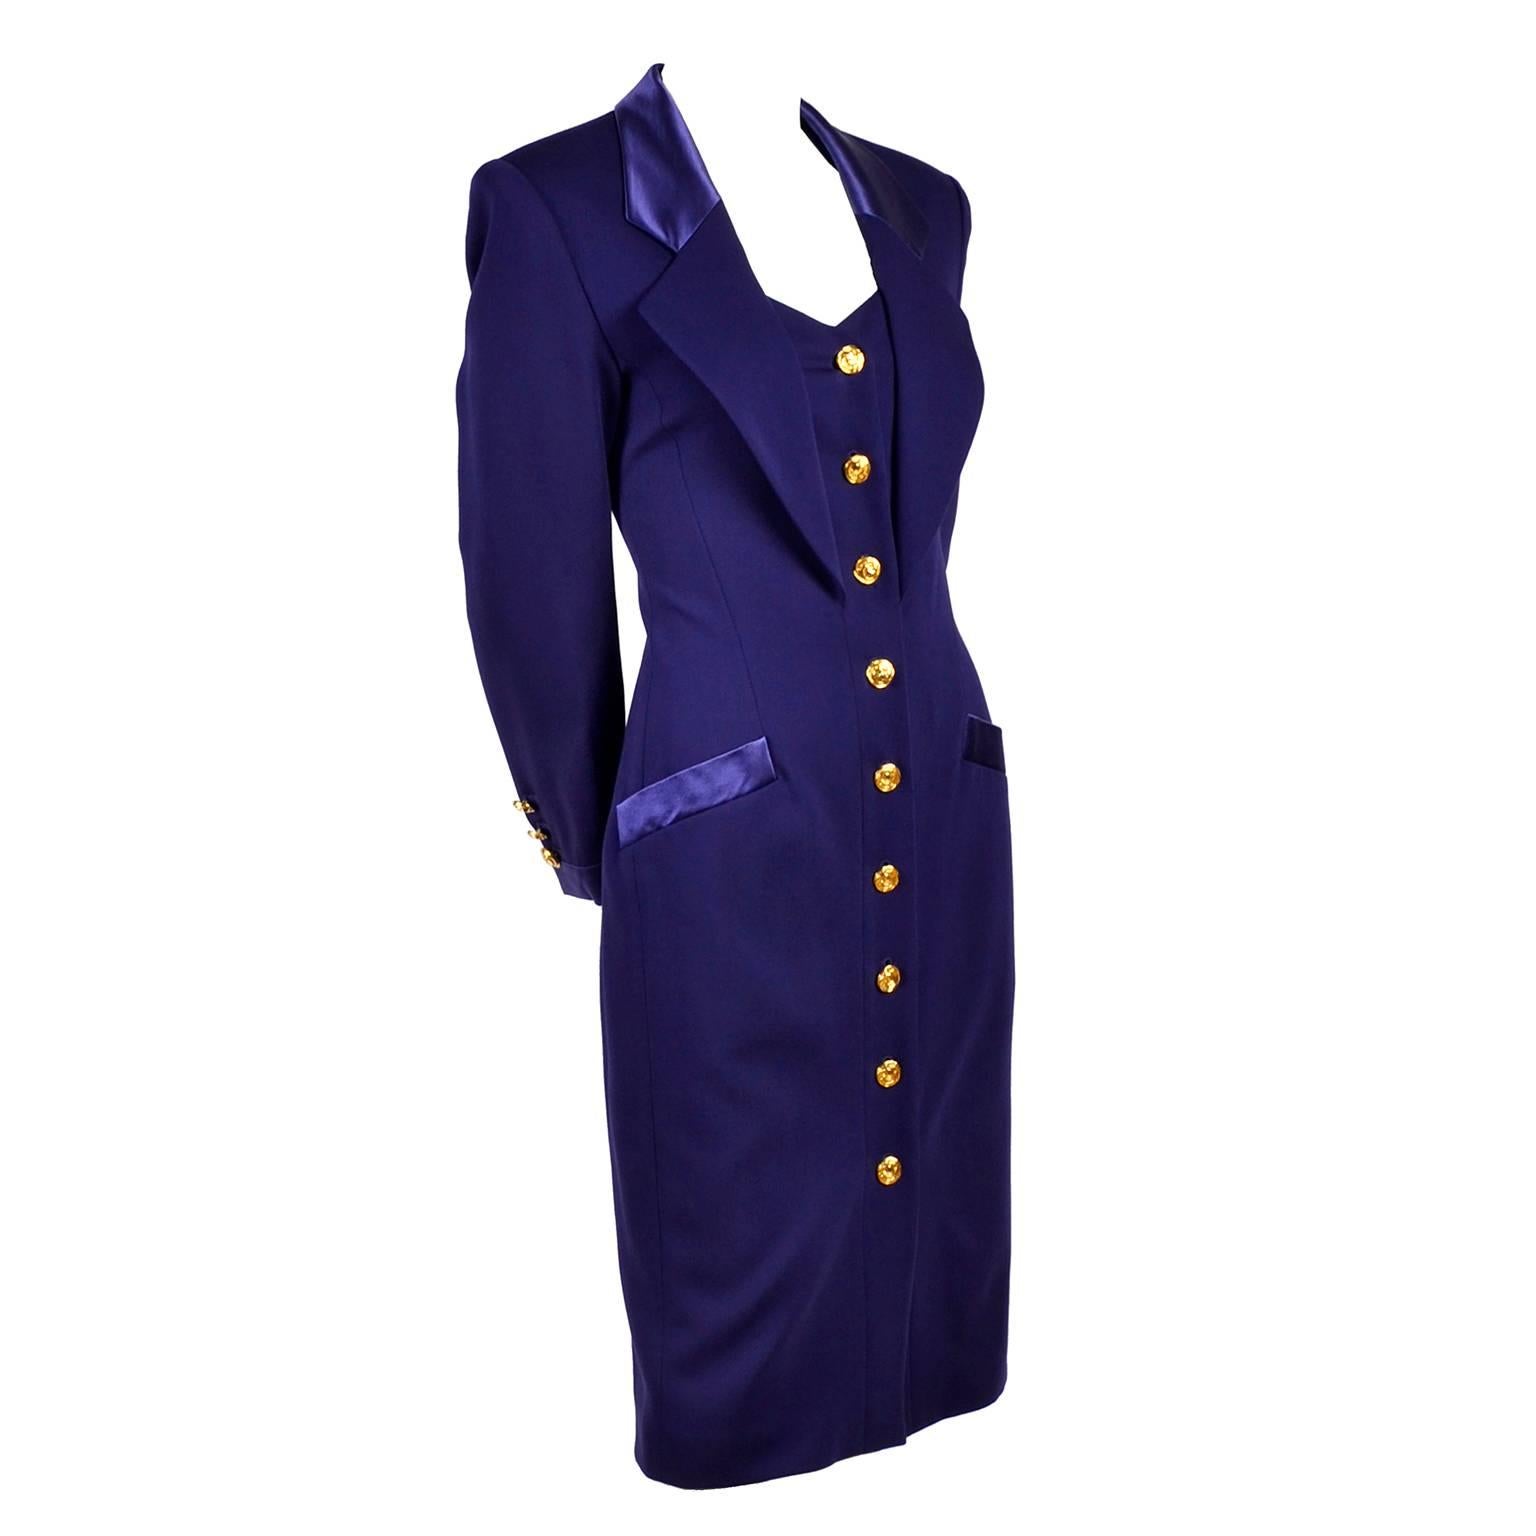 New 1980s Escada Vintage Dress in Tuxedo Style Purple Wool W/ Satin Trim w Tags